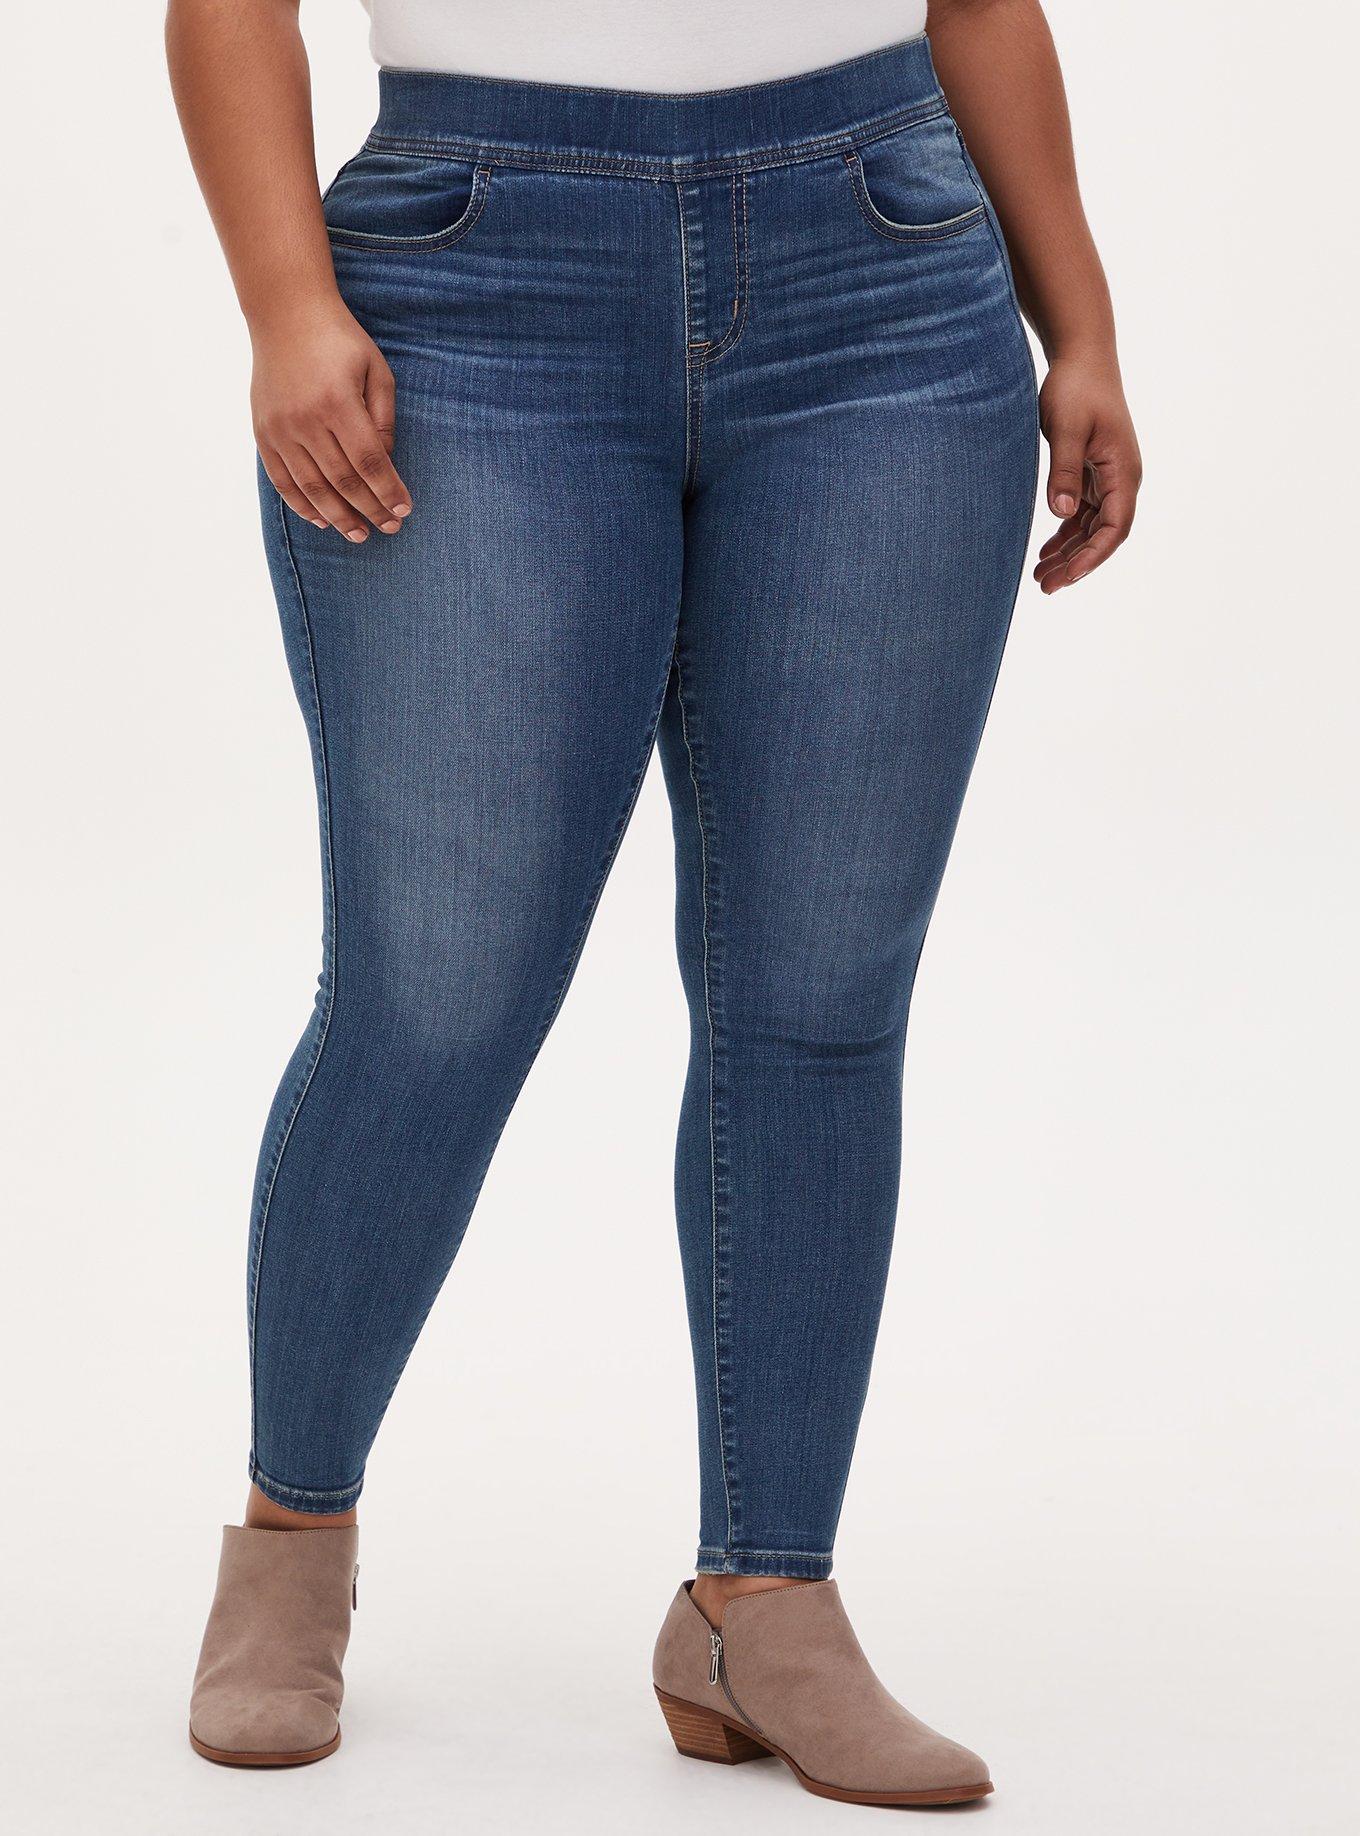 Plus Size - Lean Jean Skinny Super Soft High-Rise Jean - Torrid